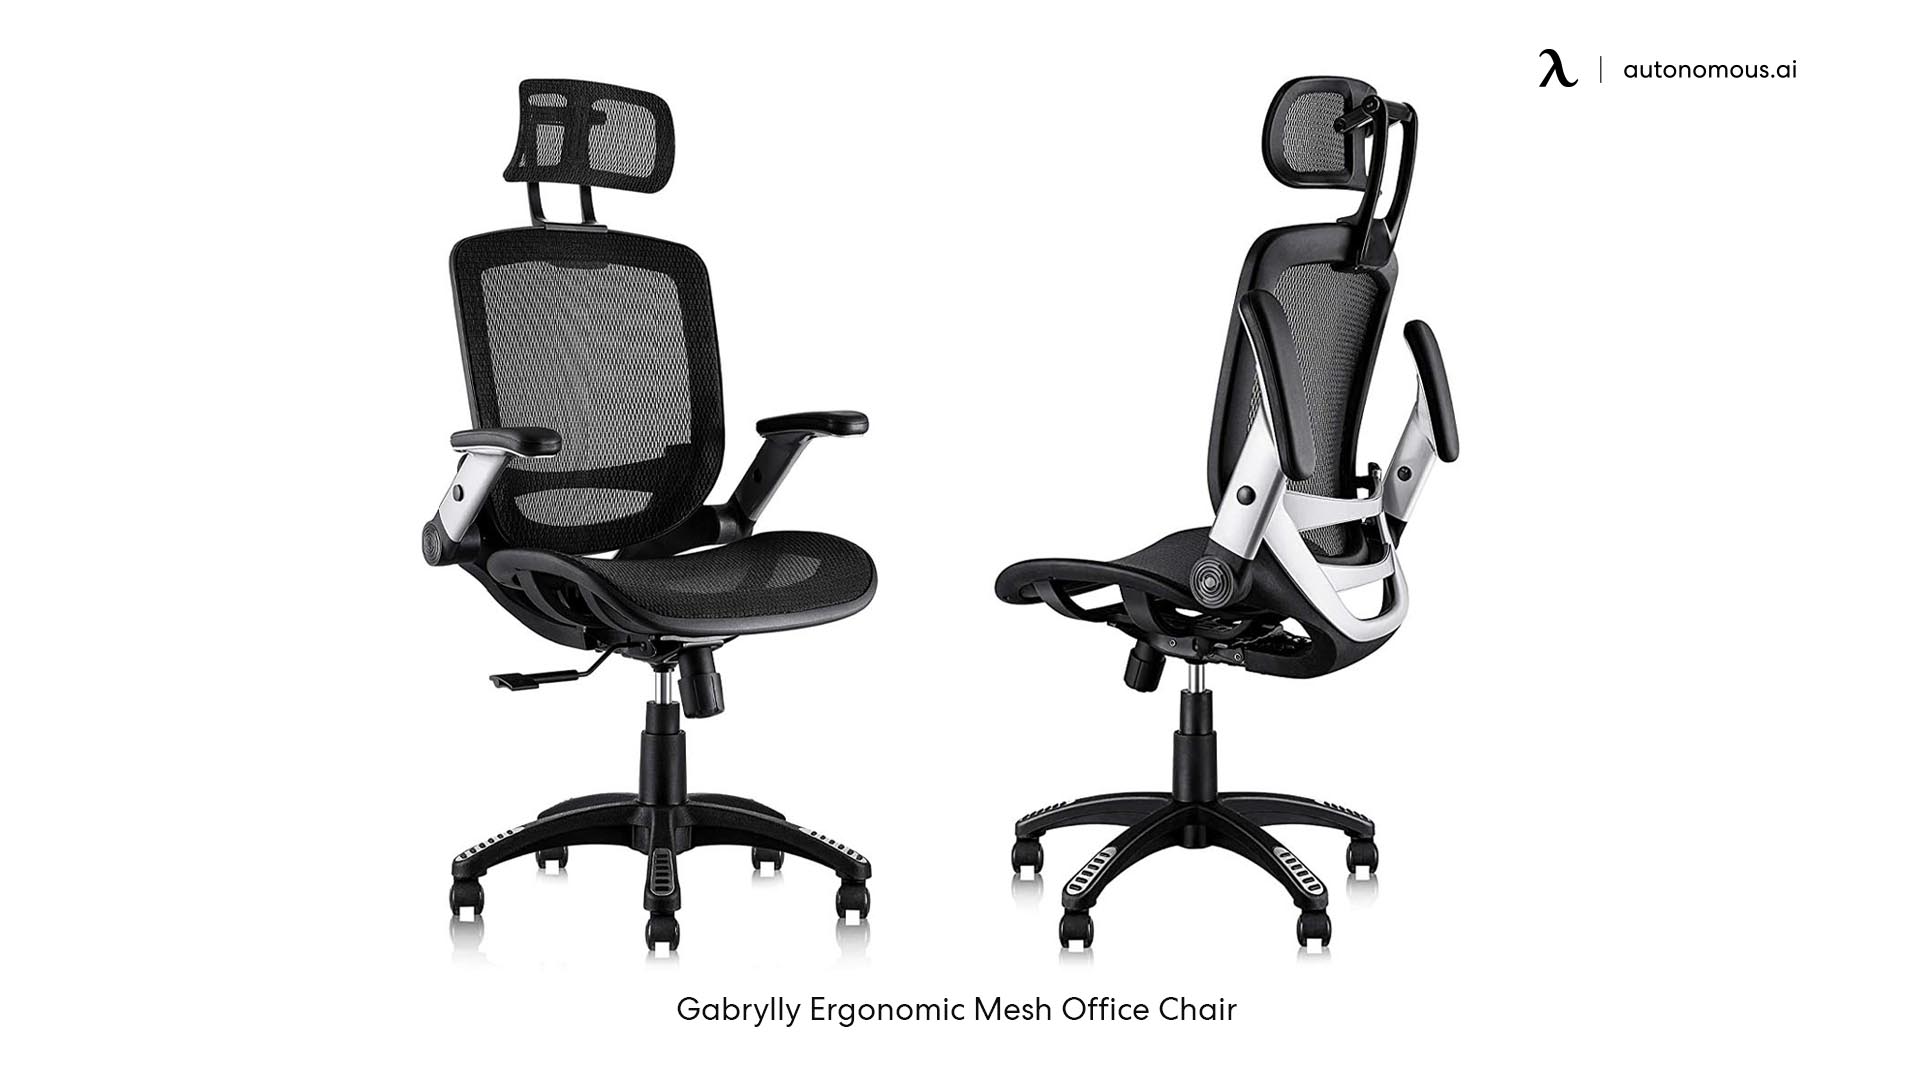 Gabrylly Ergonomic Mesh Office Chair